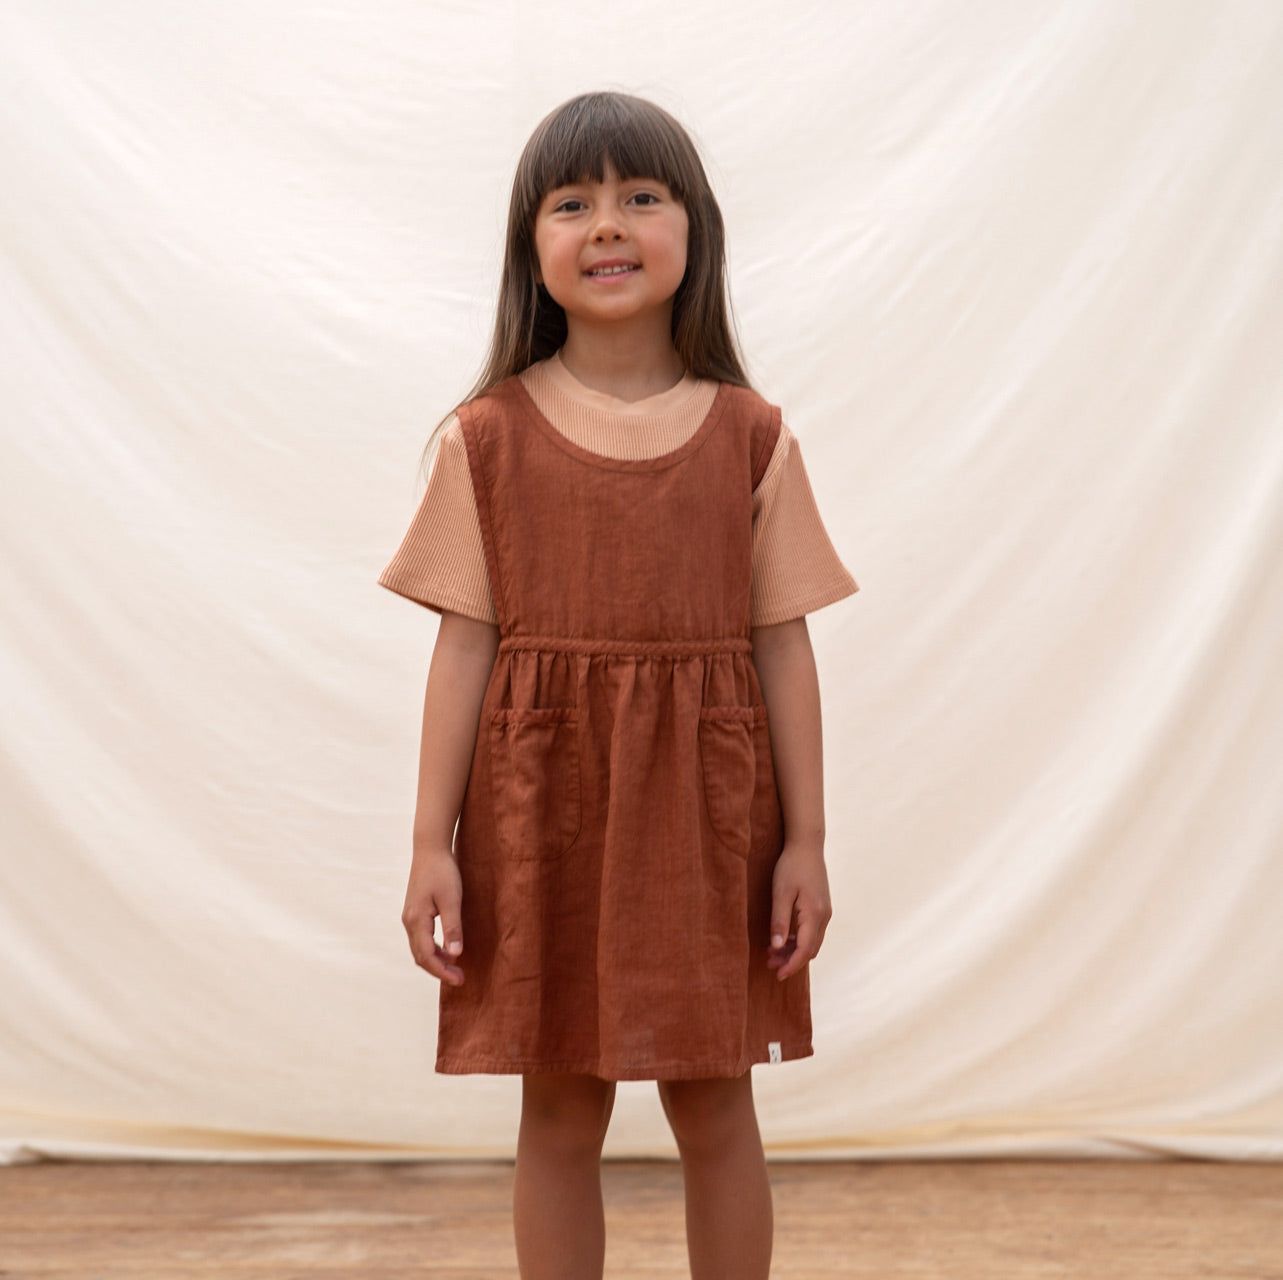 Style Arc - Zoe Kids Pinafore Dress Sewing Pattern Sizes 1 to 8 Years -  Quilt Yarn Stitch